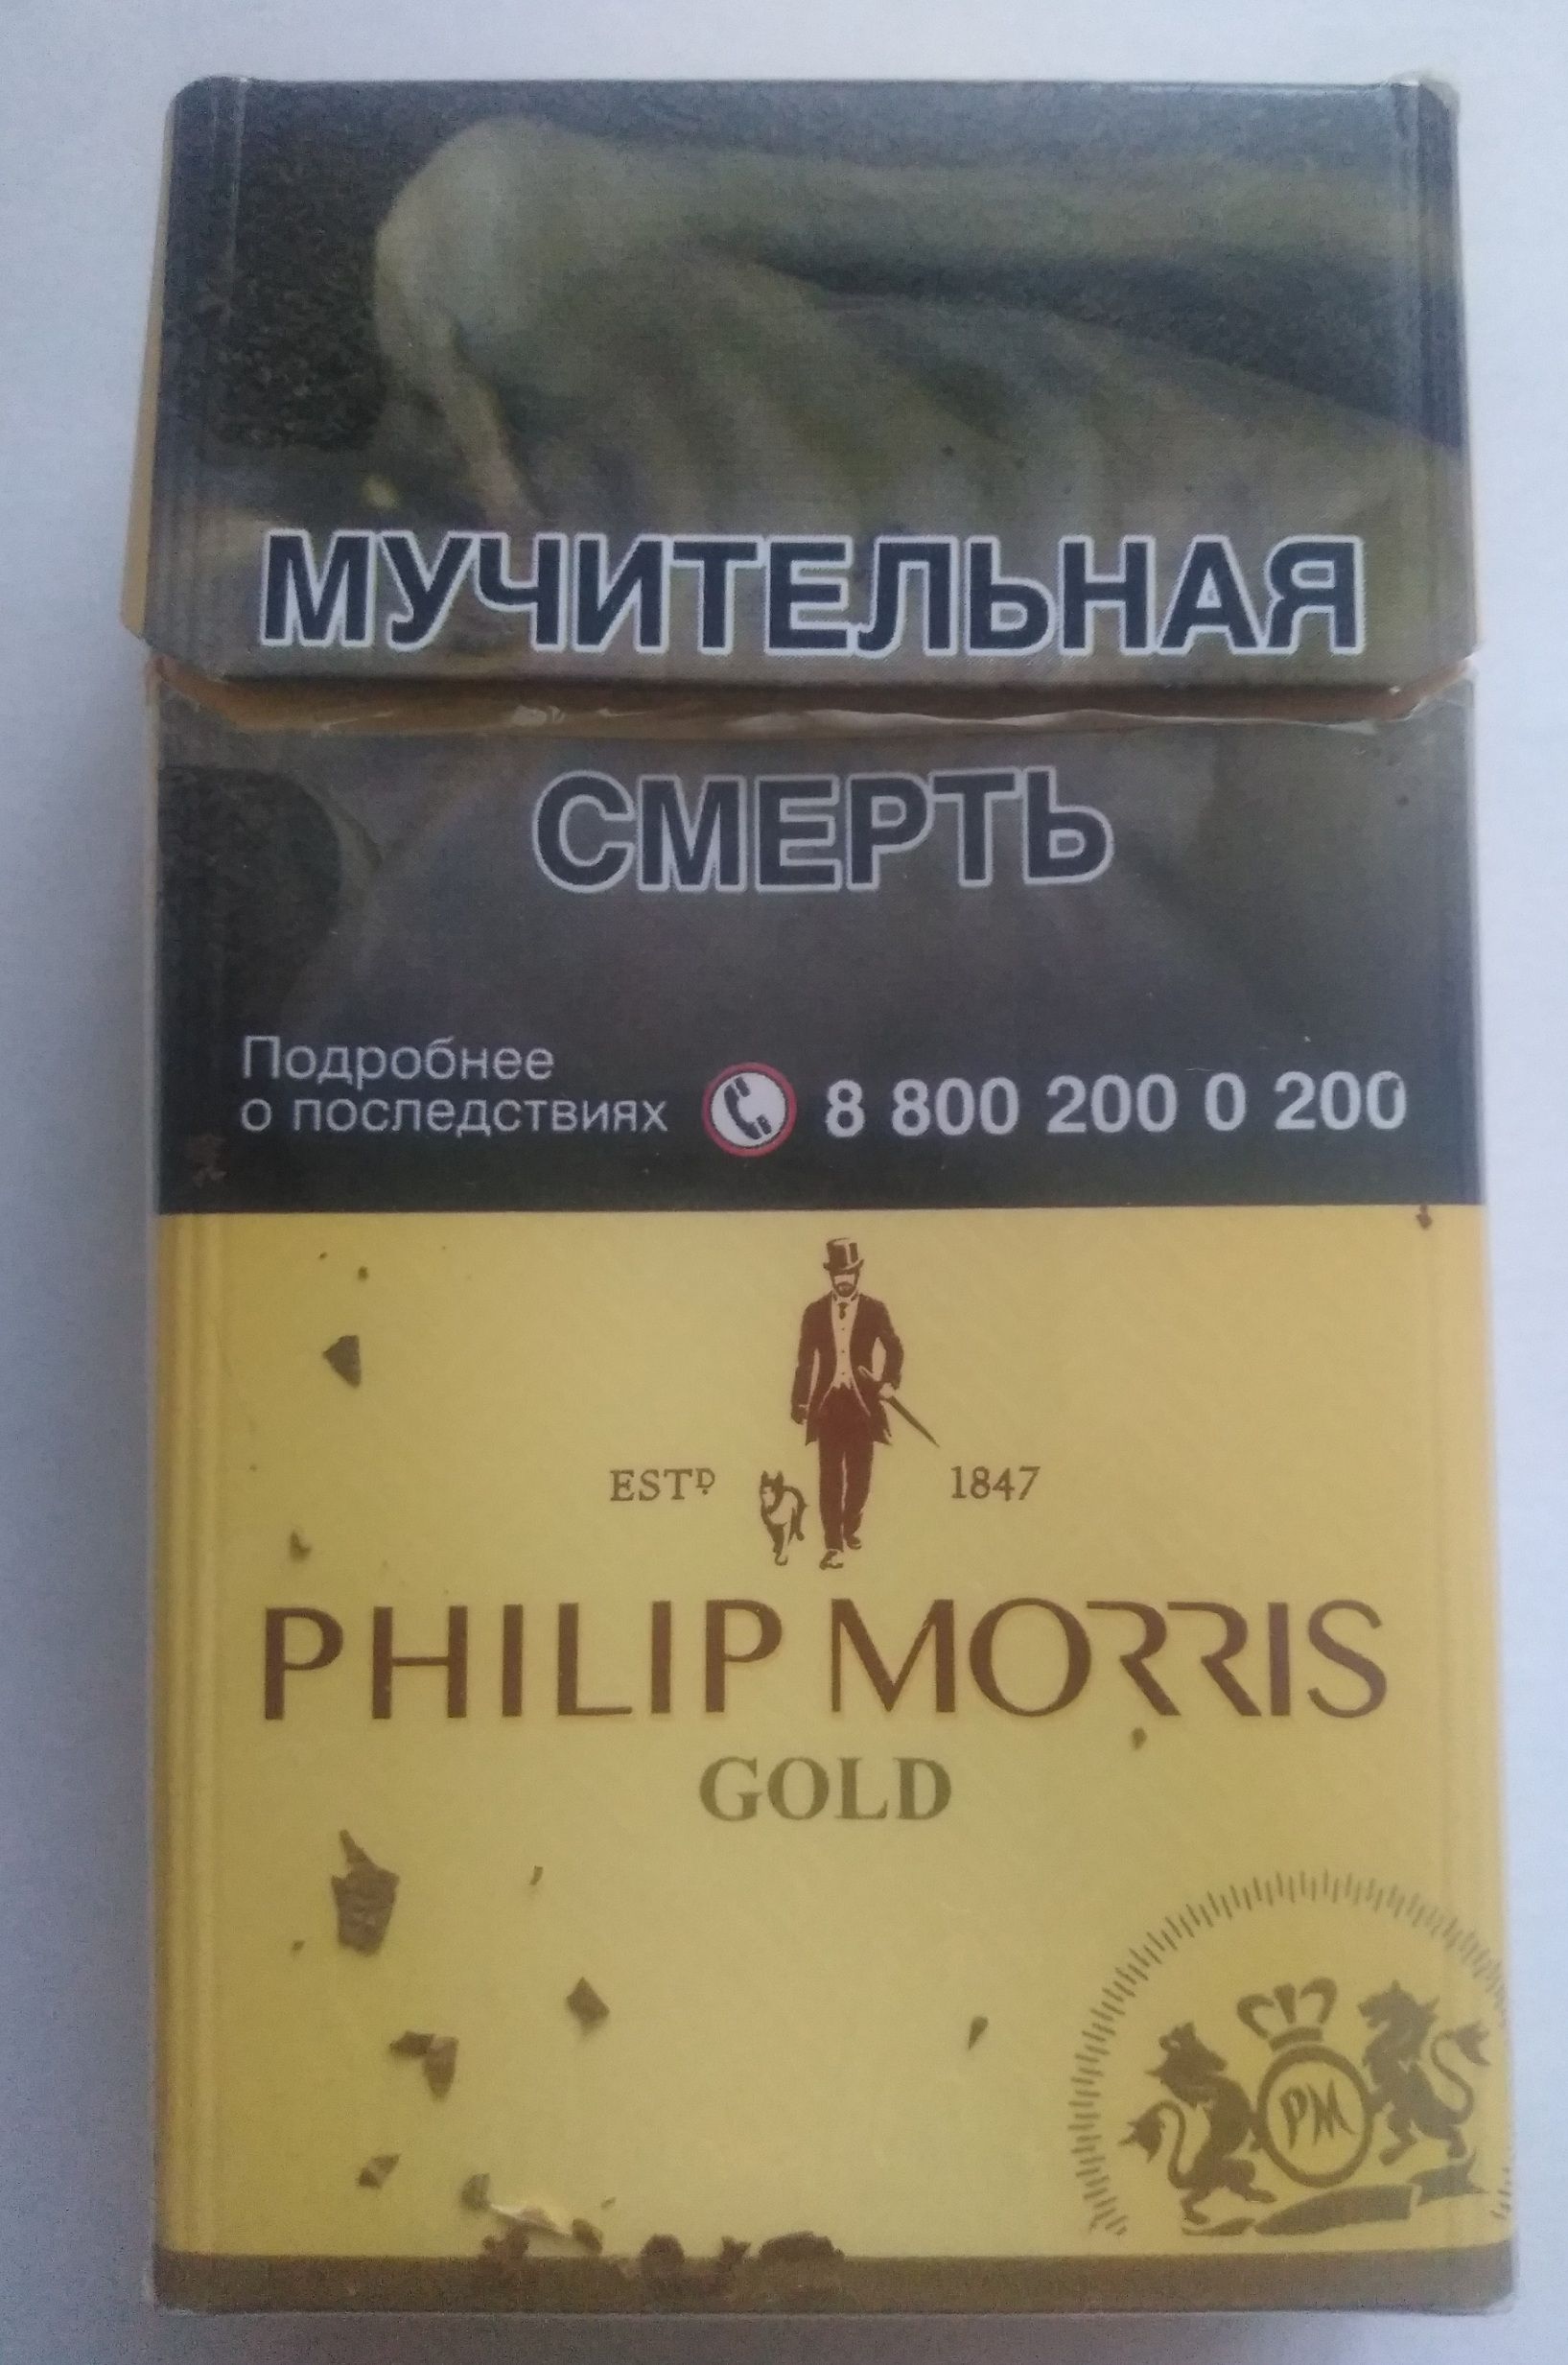 Филлип моррис отзывы. Филип Моррис Голд (Philip Morris Gold). Сигареты Филип Моррис Голд. Филип Моррис желтые сигареты. Филипс Морис Голд.